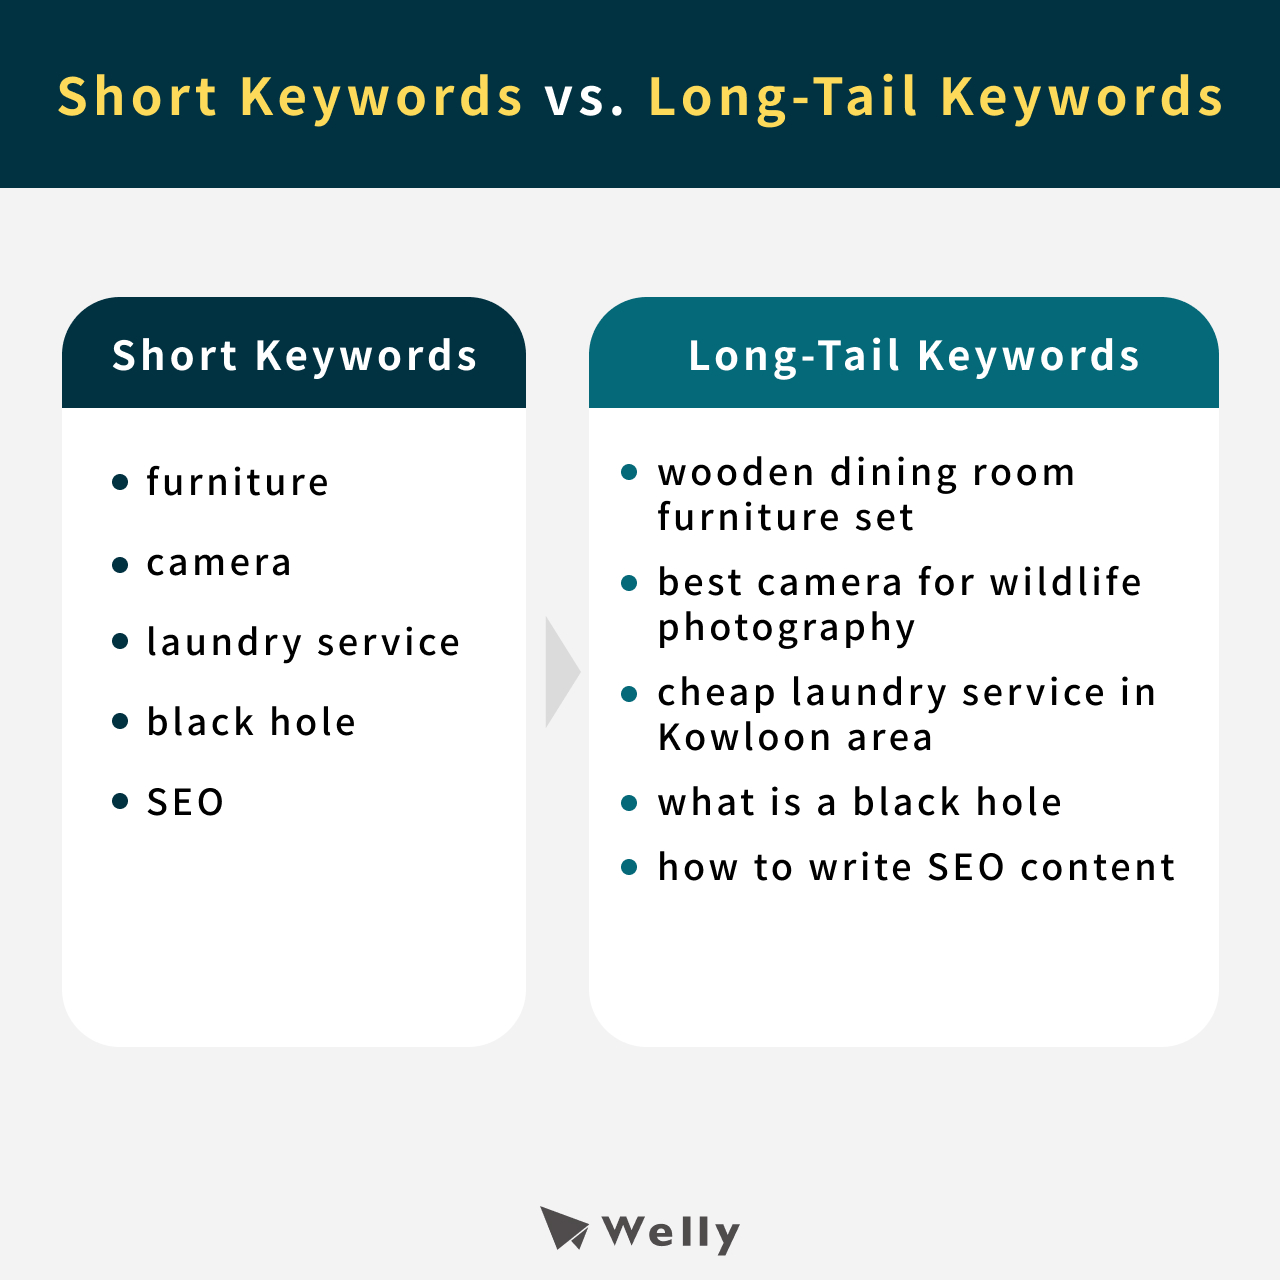 Short Keywords vs. Long-Tail Keywords